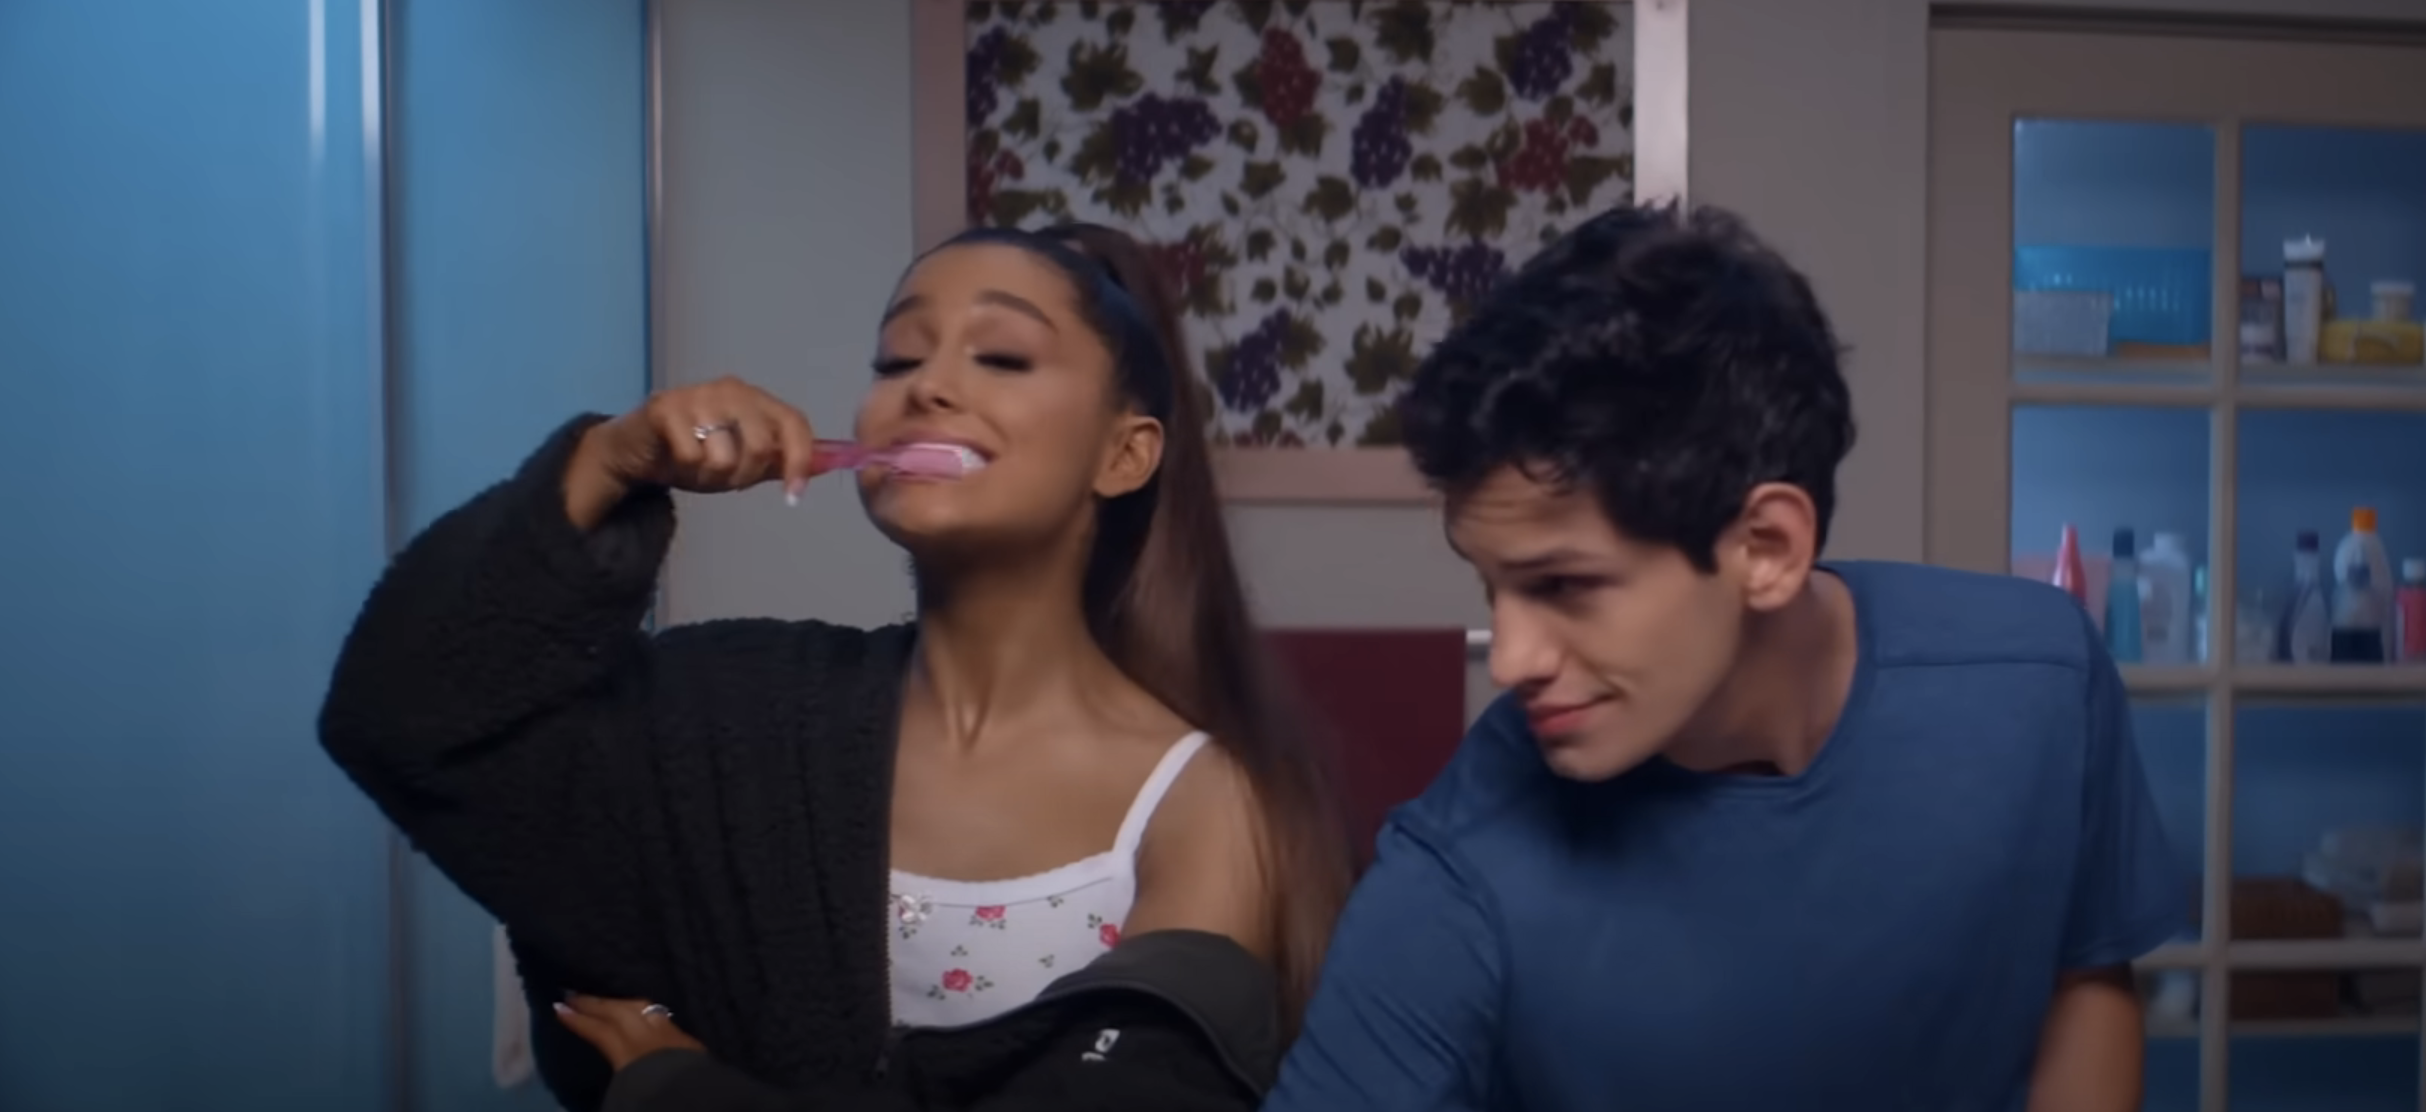 Screenshot from an Ariana Grande music video